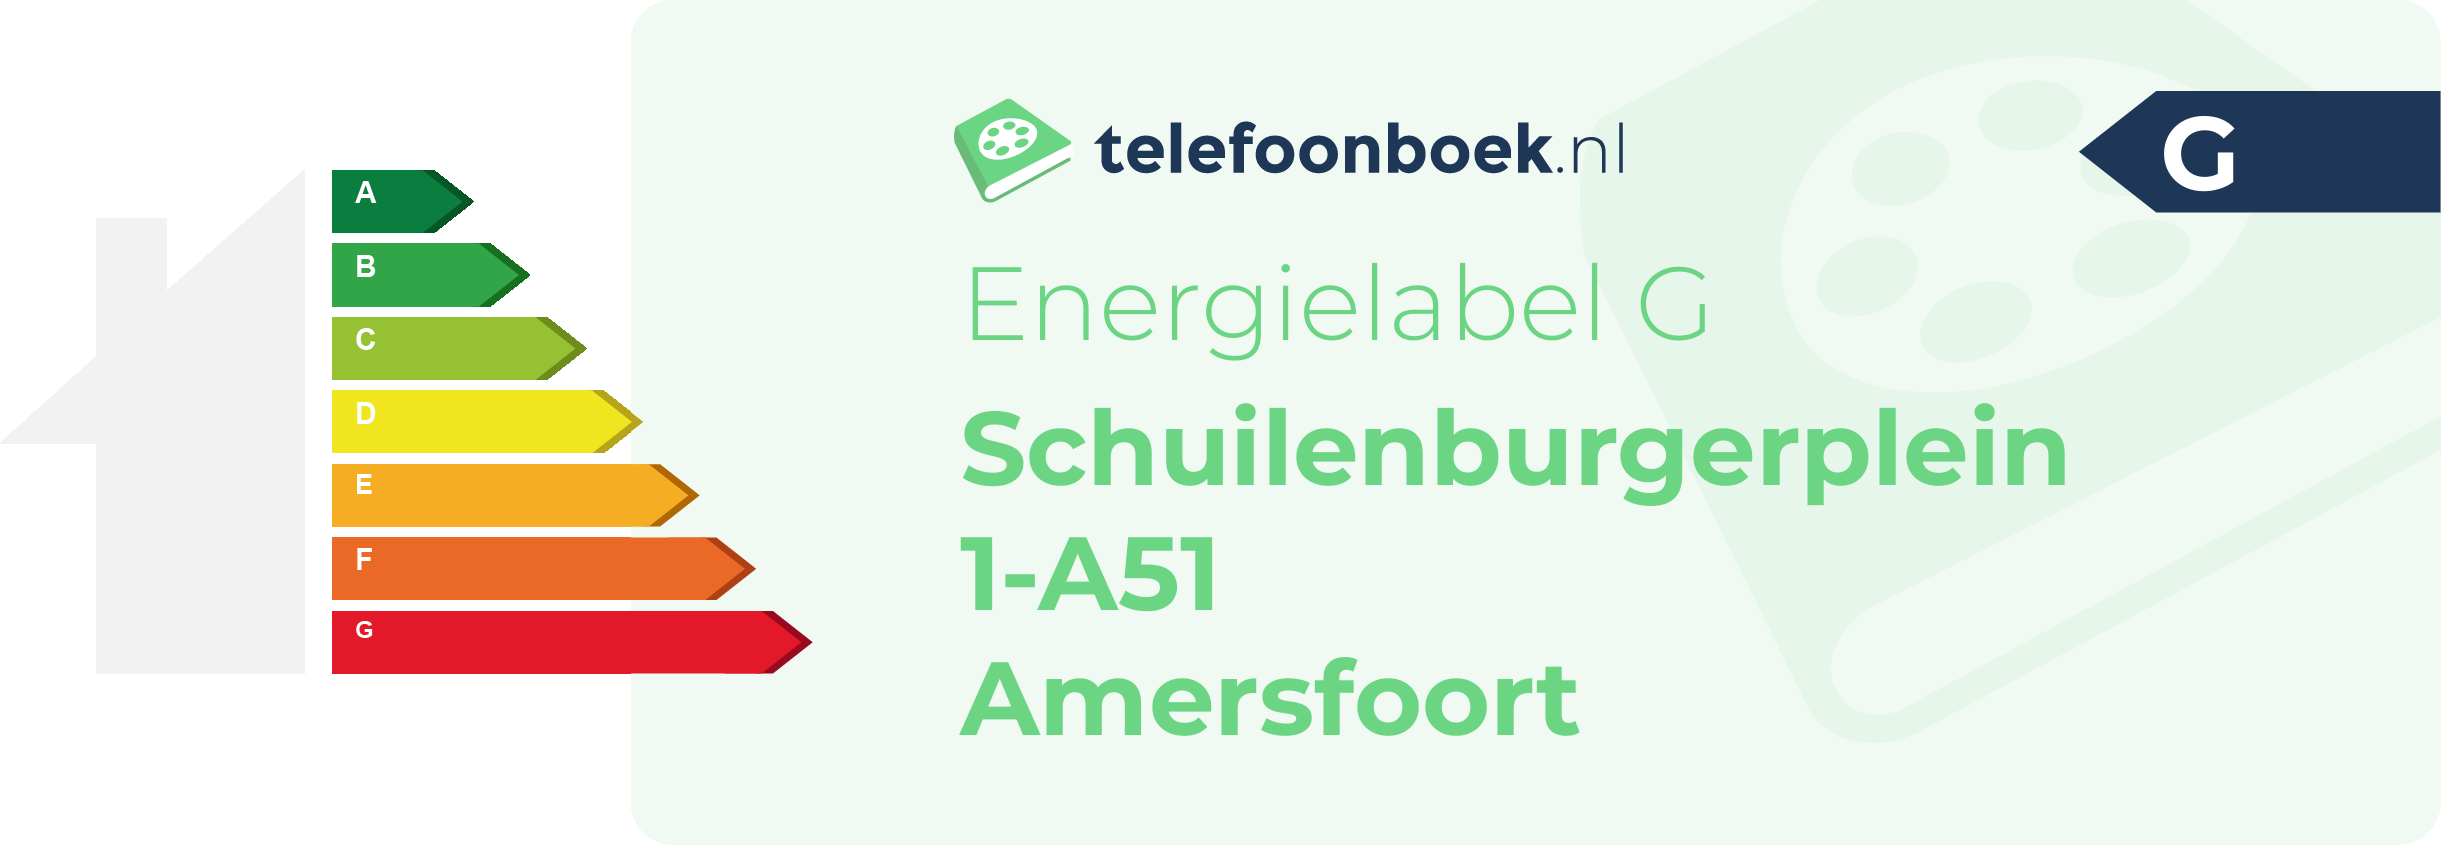 Energielabel Schuilenburgerplein 1-A51 Amersfoort